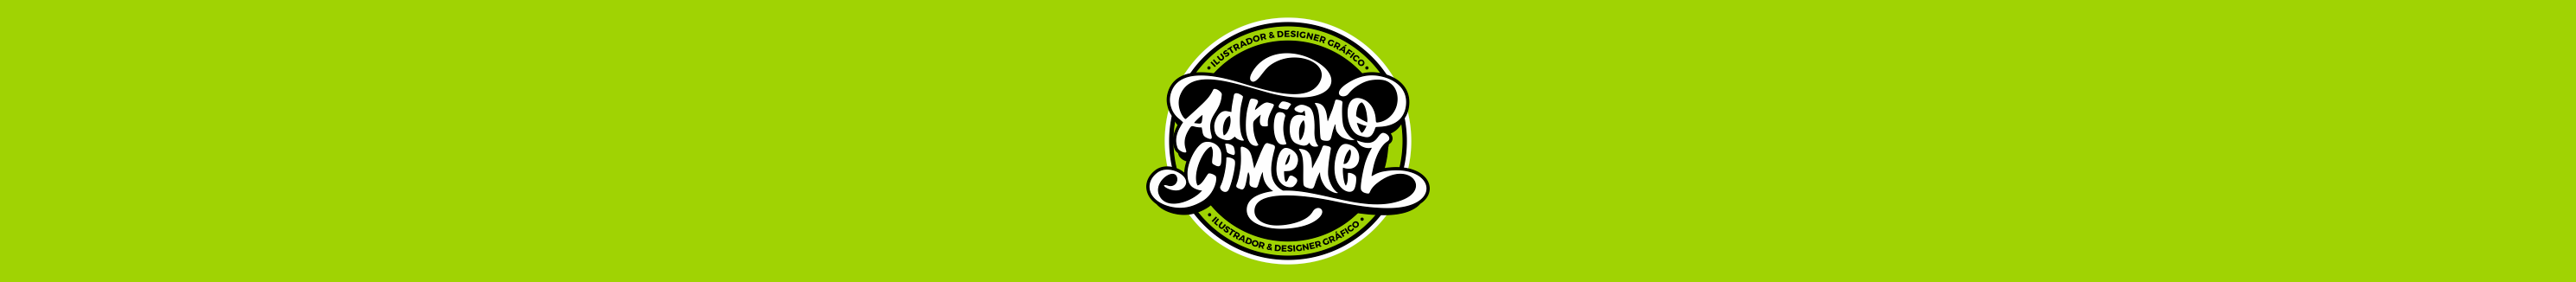 Adriano Gimenez's profile banner